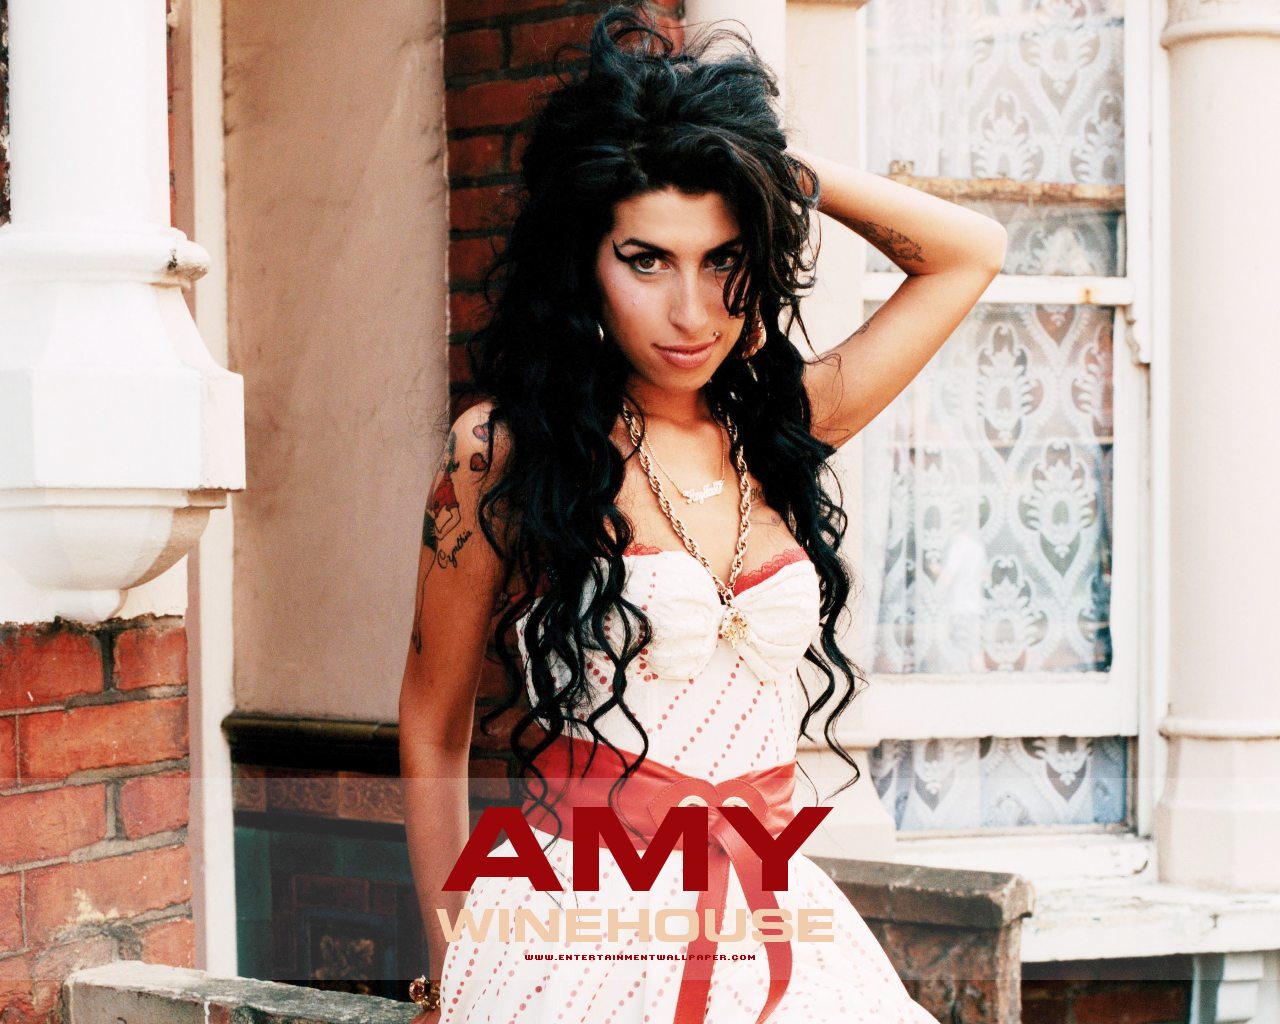 http://4.bp.blogspot.com/-FyiOkIHztKE/TWCk4XOJPSI/AAAAAAAACsA/aHJO1JK2wgE/s1600/Amy+Winehouse+Sexy+Wallpaper.jpg